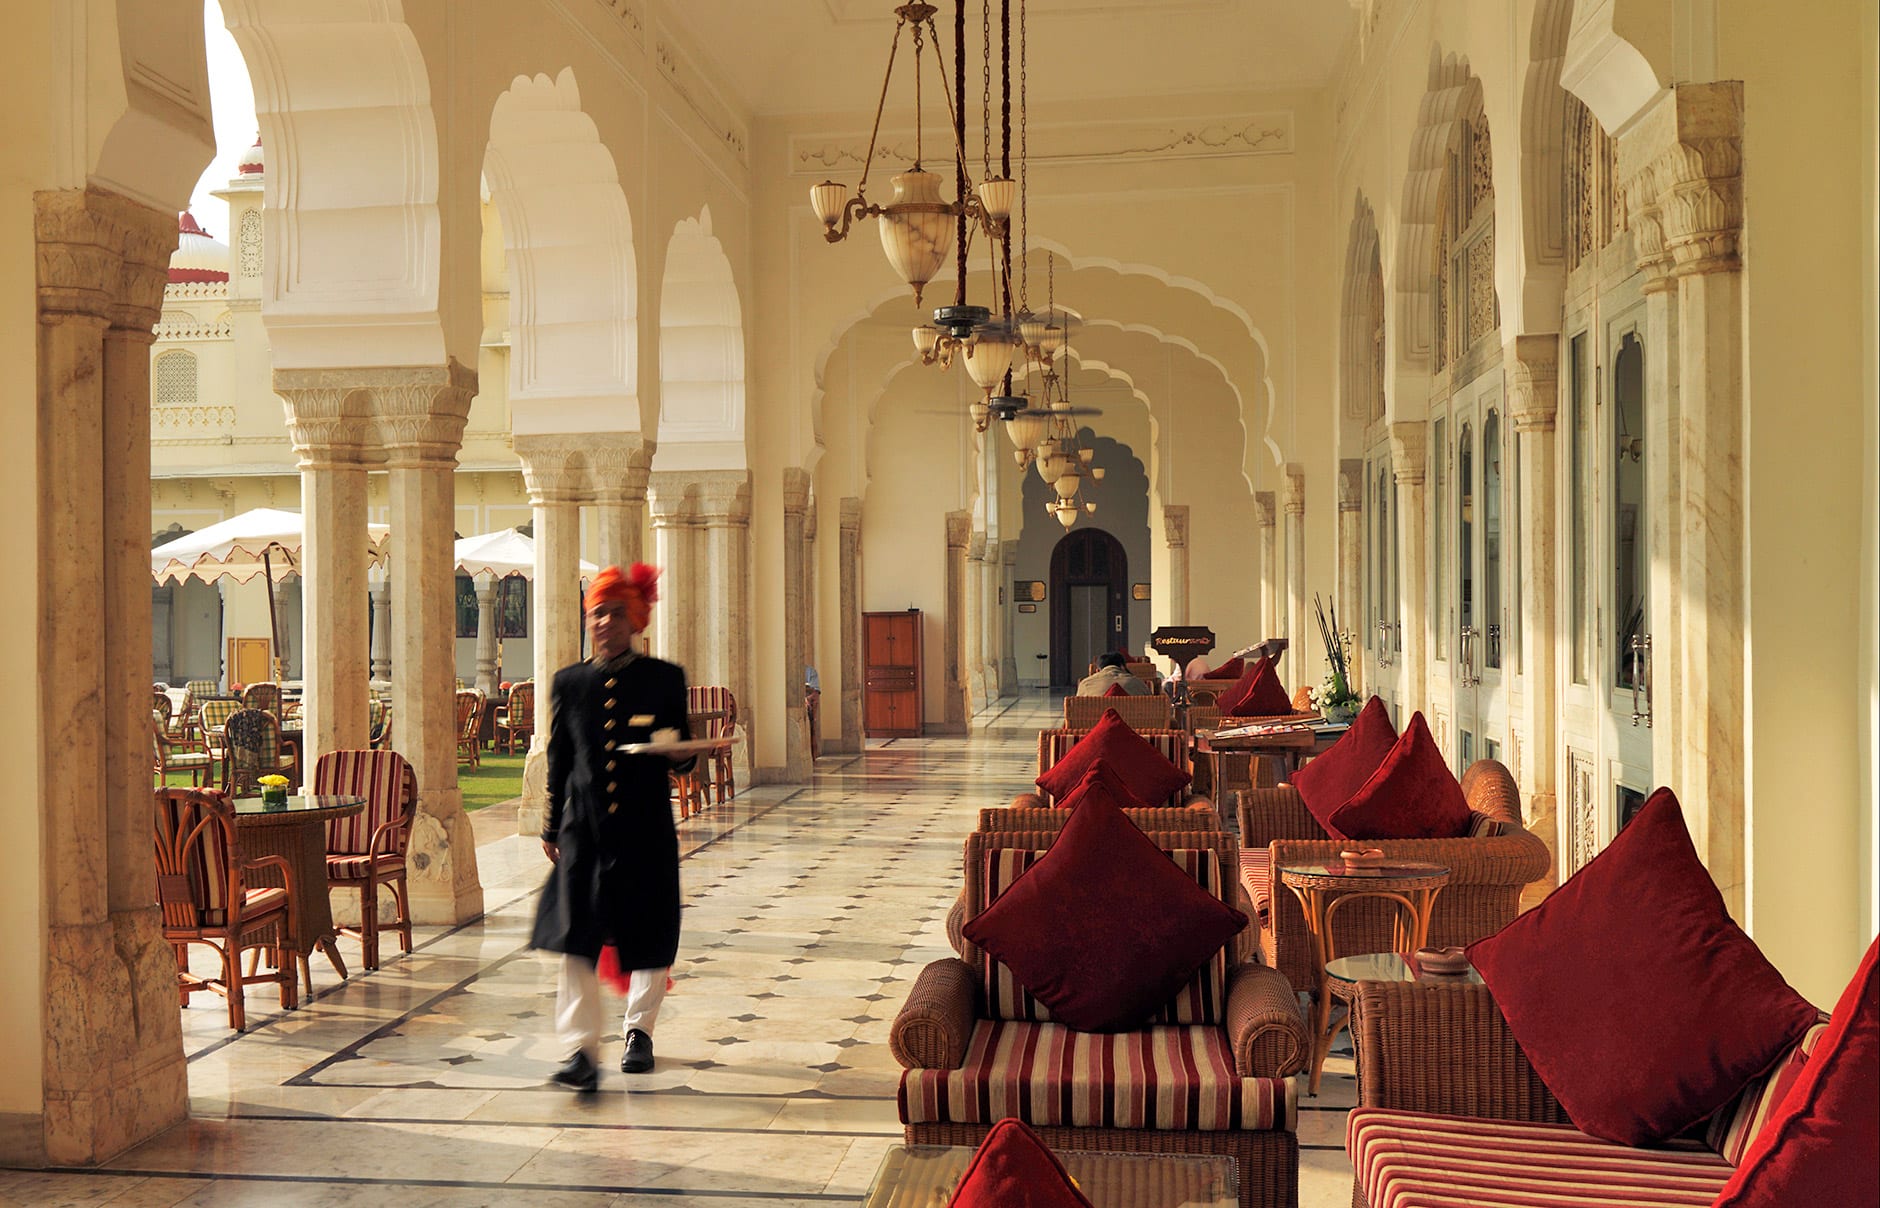 Taj Rambagh Palace, Jaipur, India. Luxury Hotel Review by TravelPlusStyle. Photo © Taj Hotels Resorts and Palaces